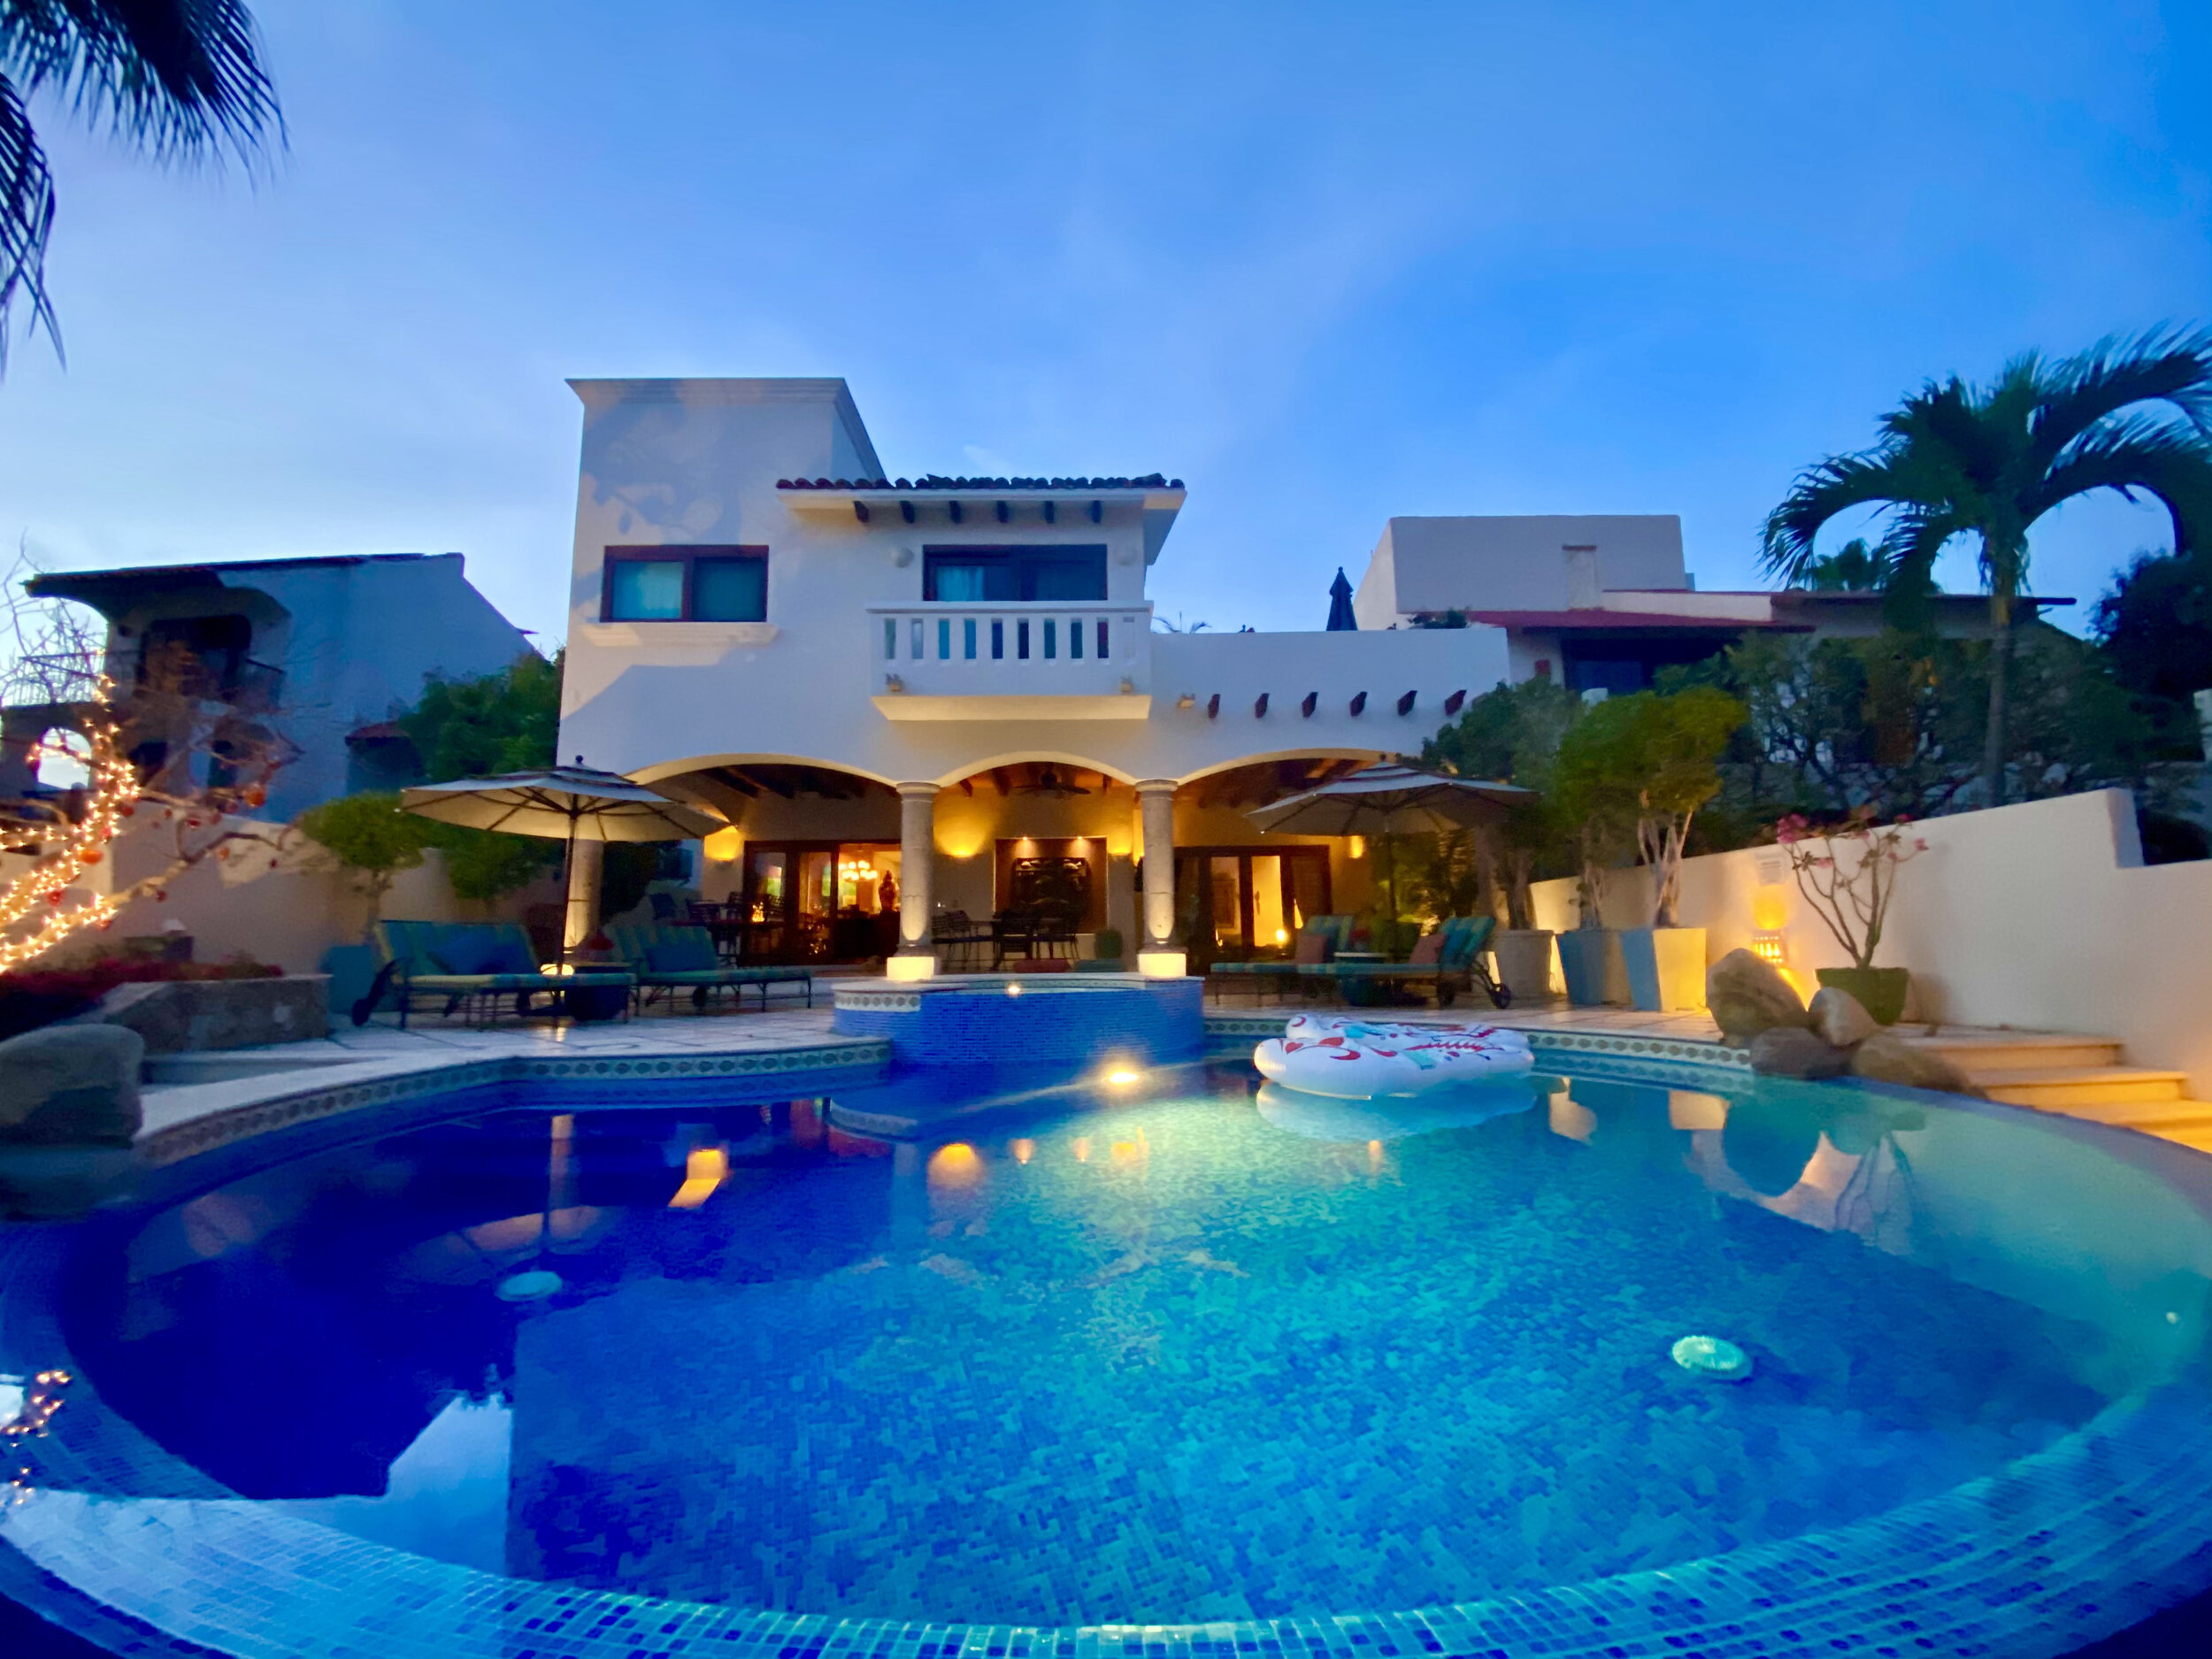 Cabo house pool.jpg